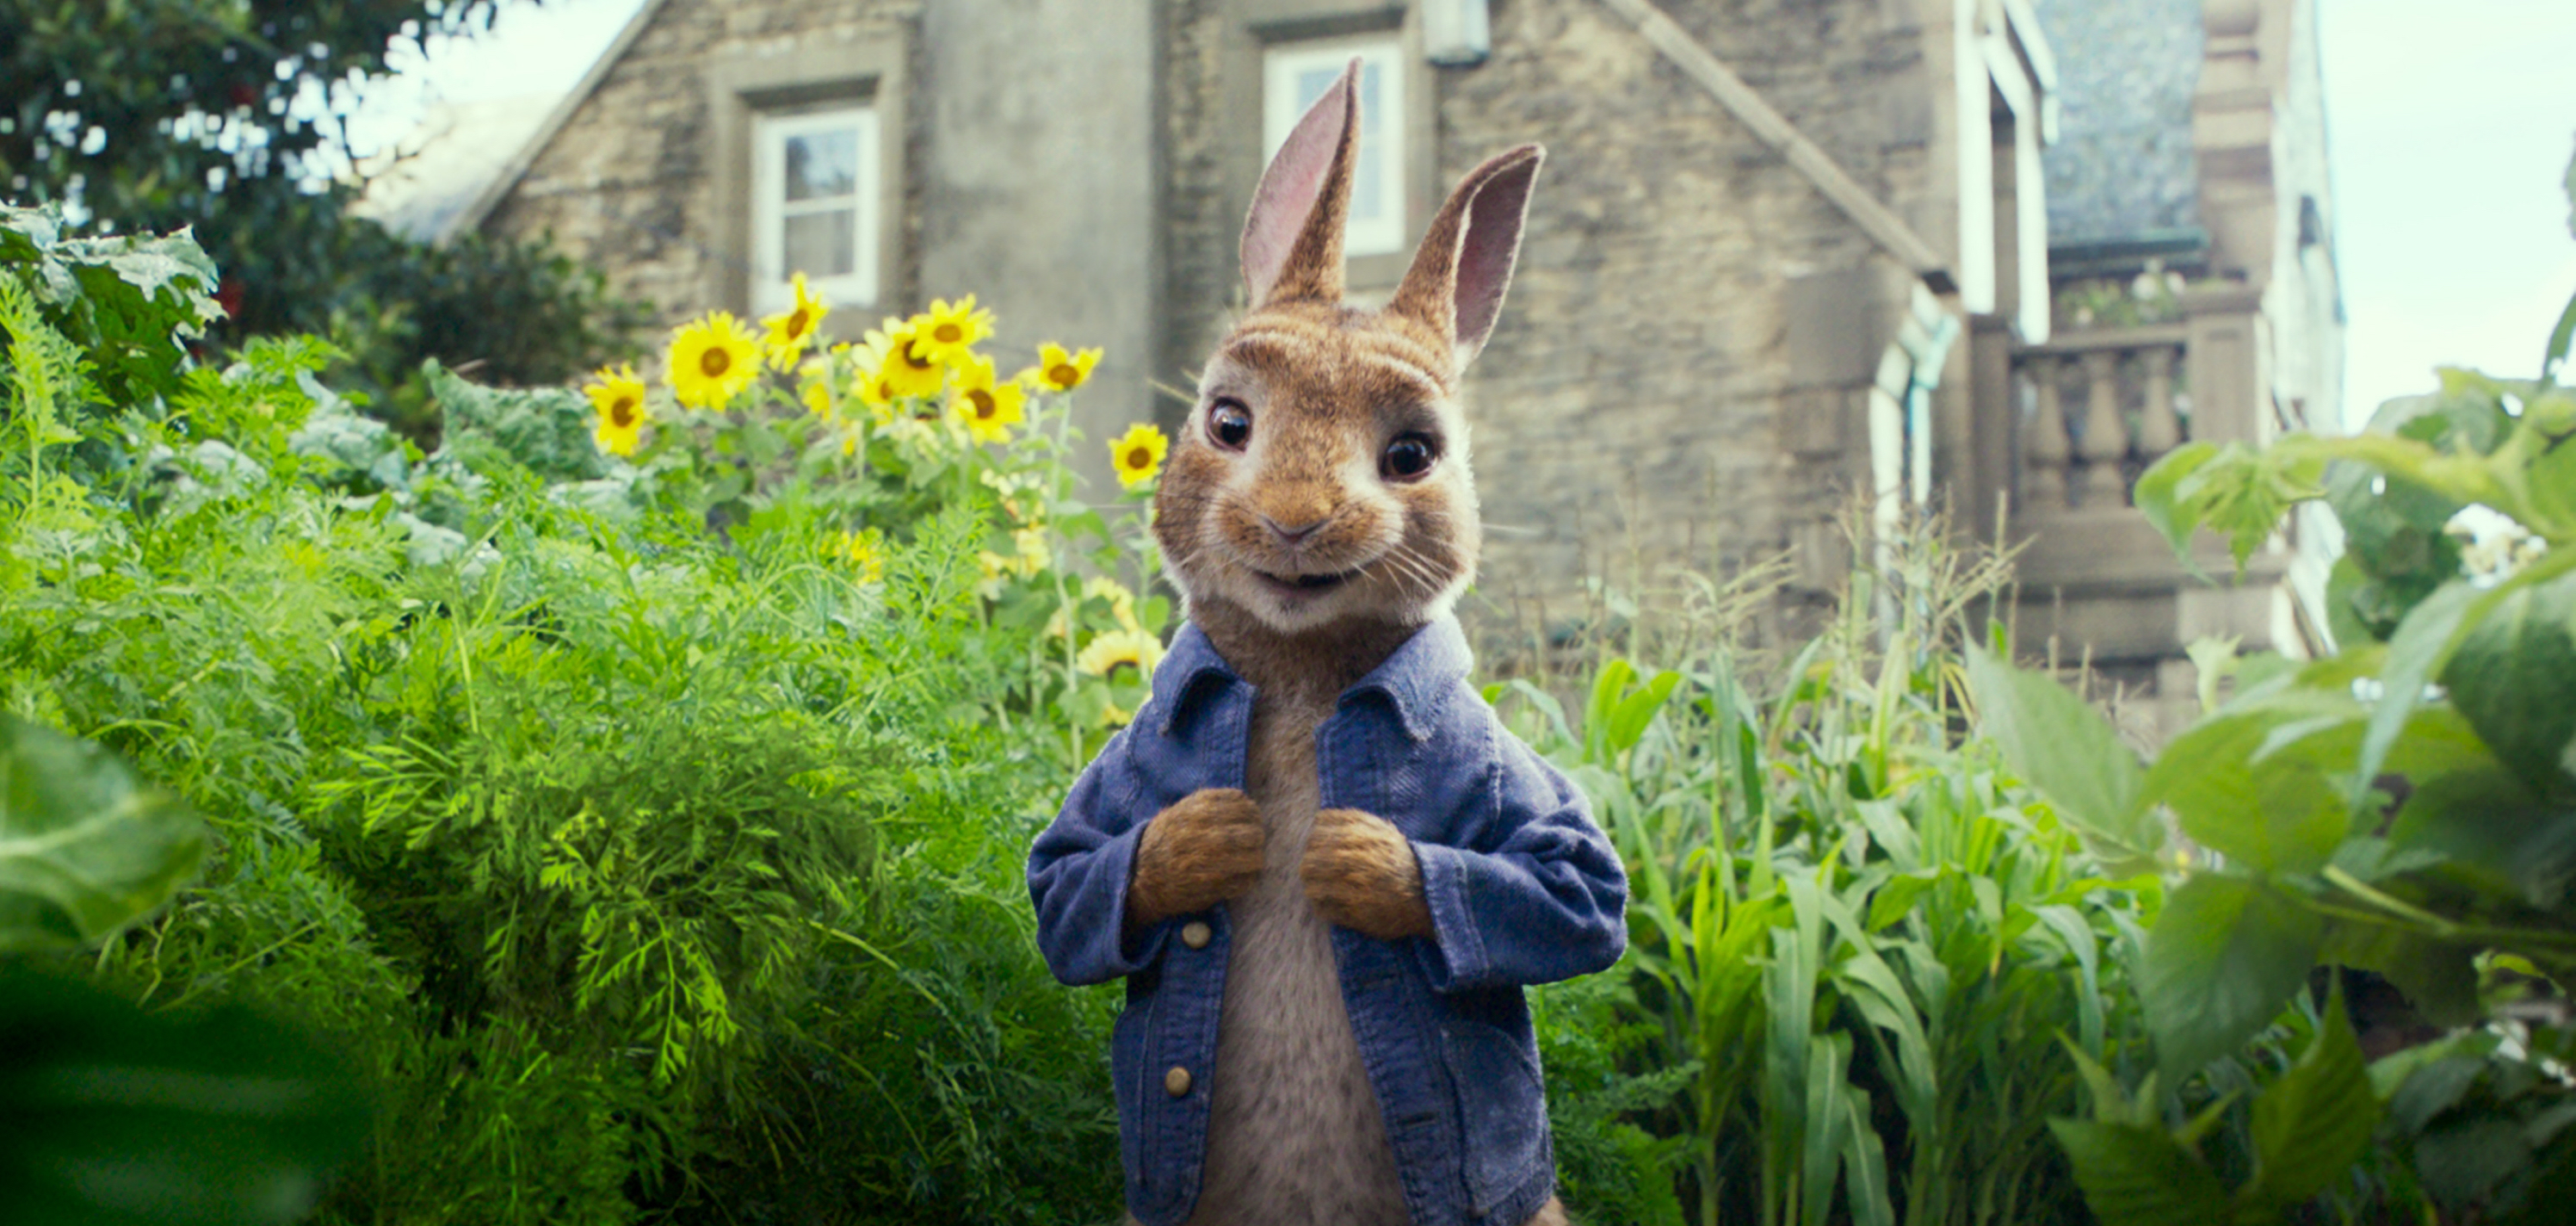 Peter Rabbit movie cast revealed | Gallery 